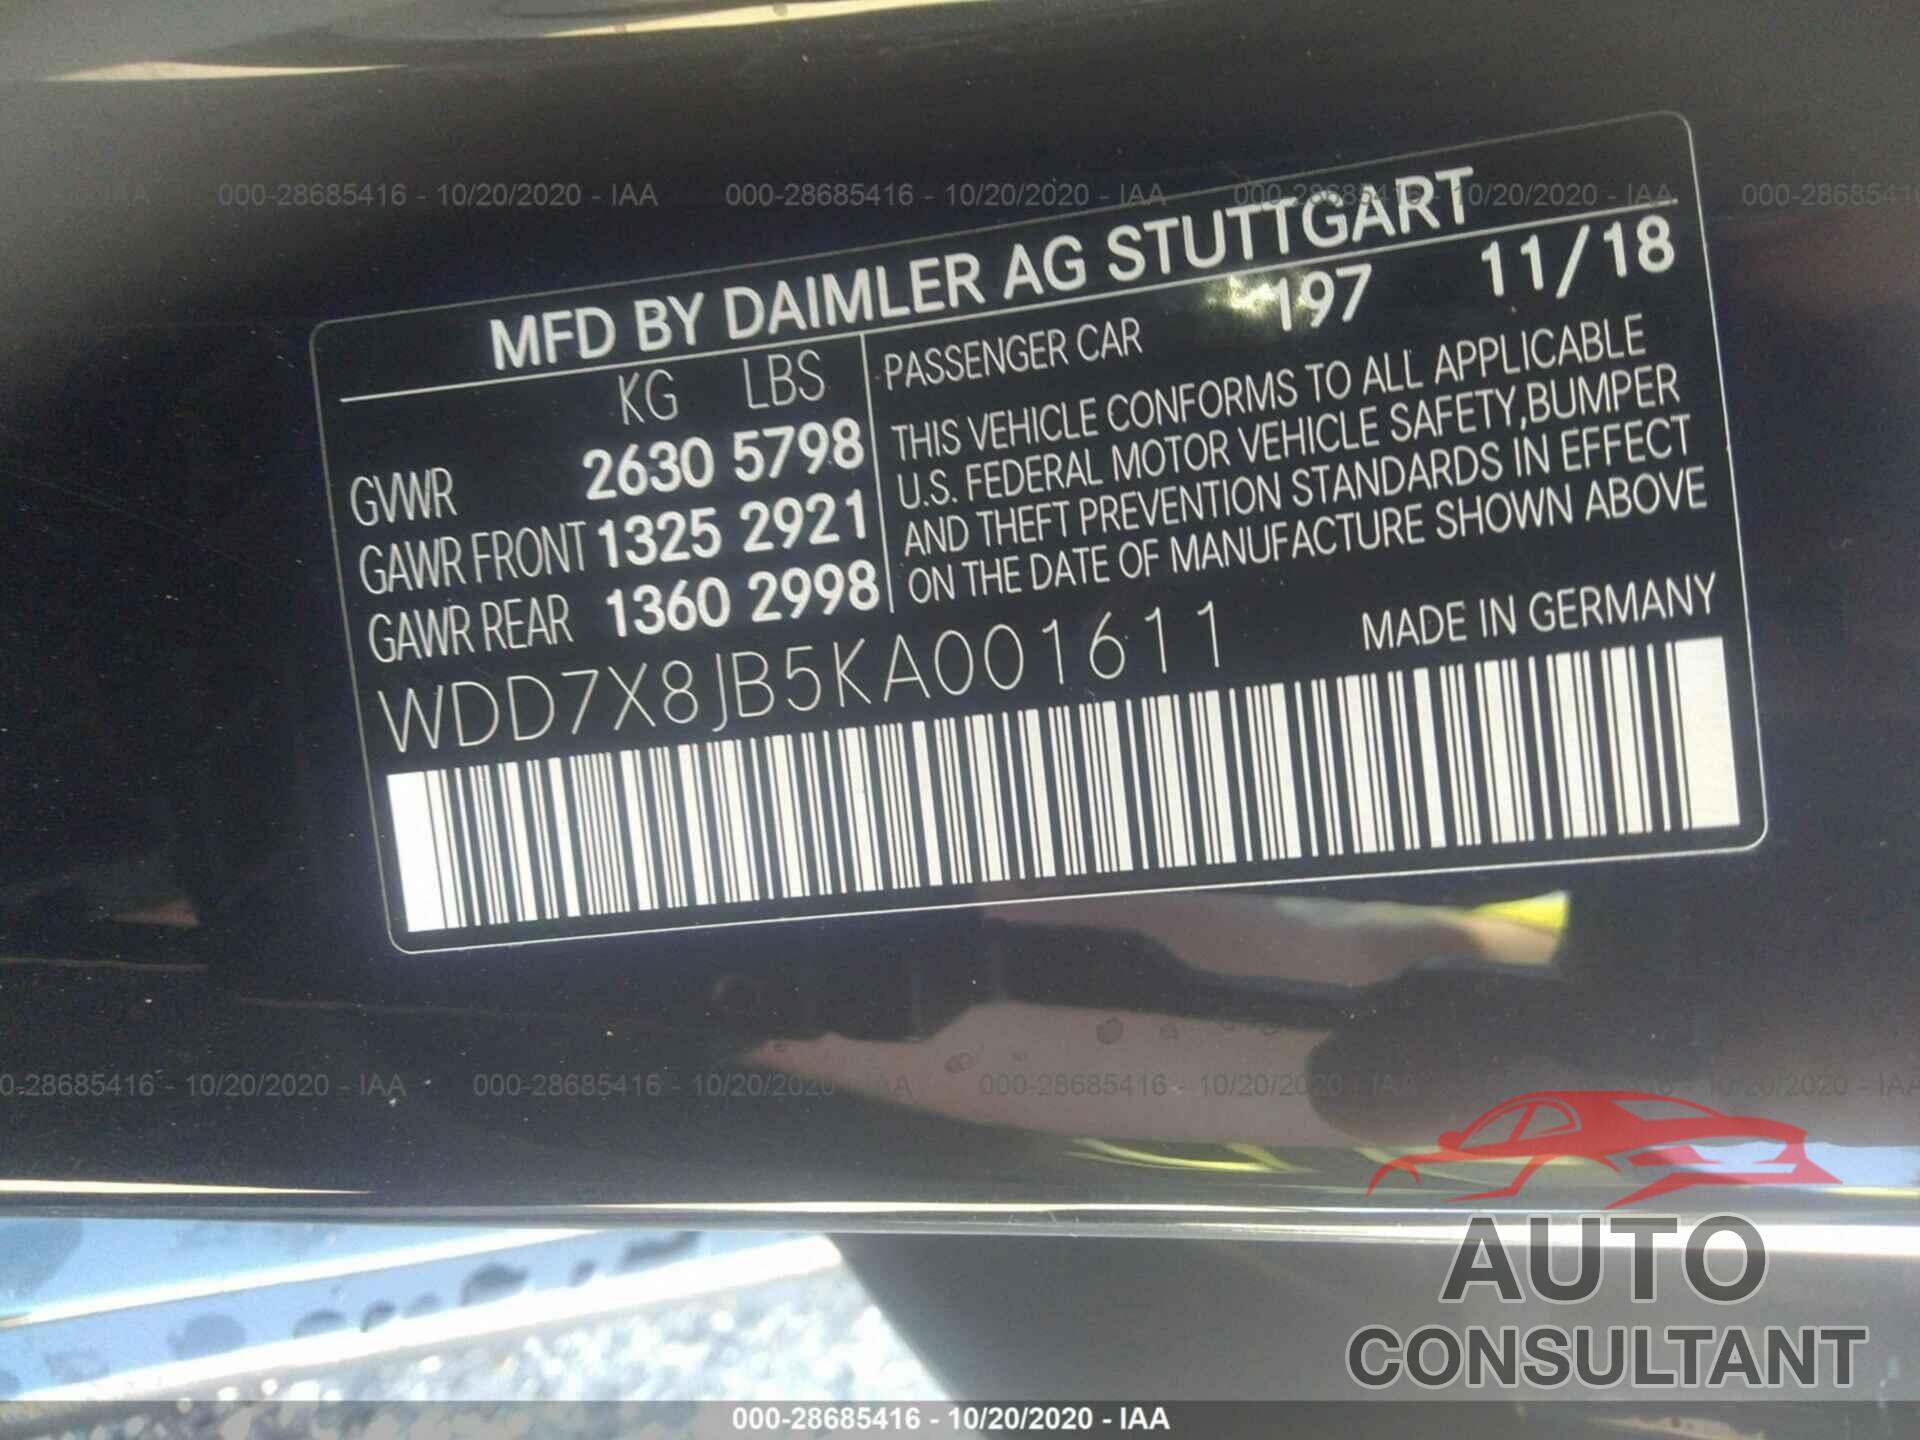 MERCEDES-BENZ AMG GT 2019 - WDD7X8JB5KA001611